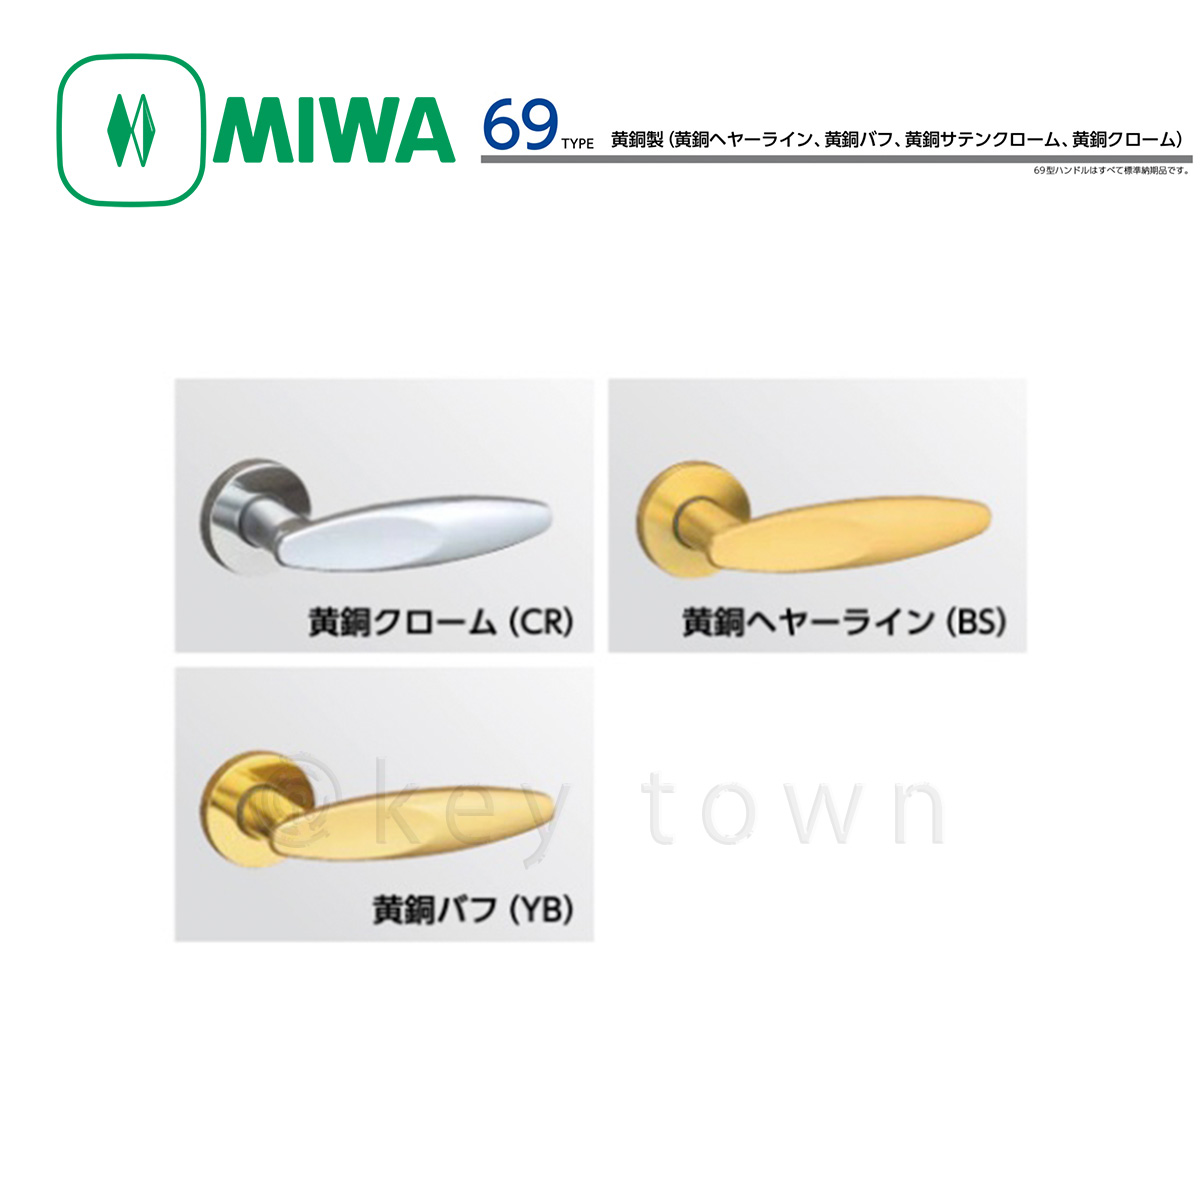 MIWA 【美和ロック】 ハンドル [MIWA-LA-69] 交換用 黄銅製[MIWALA69 